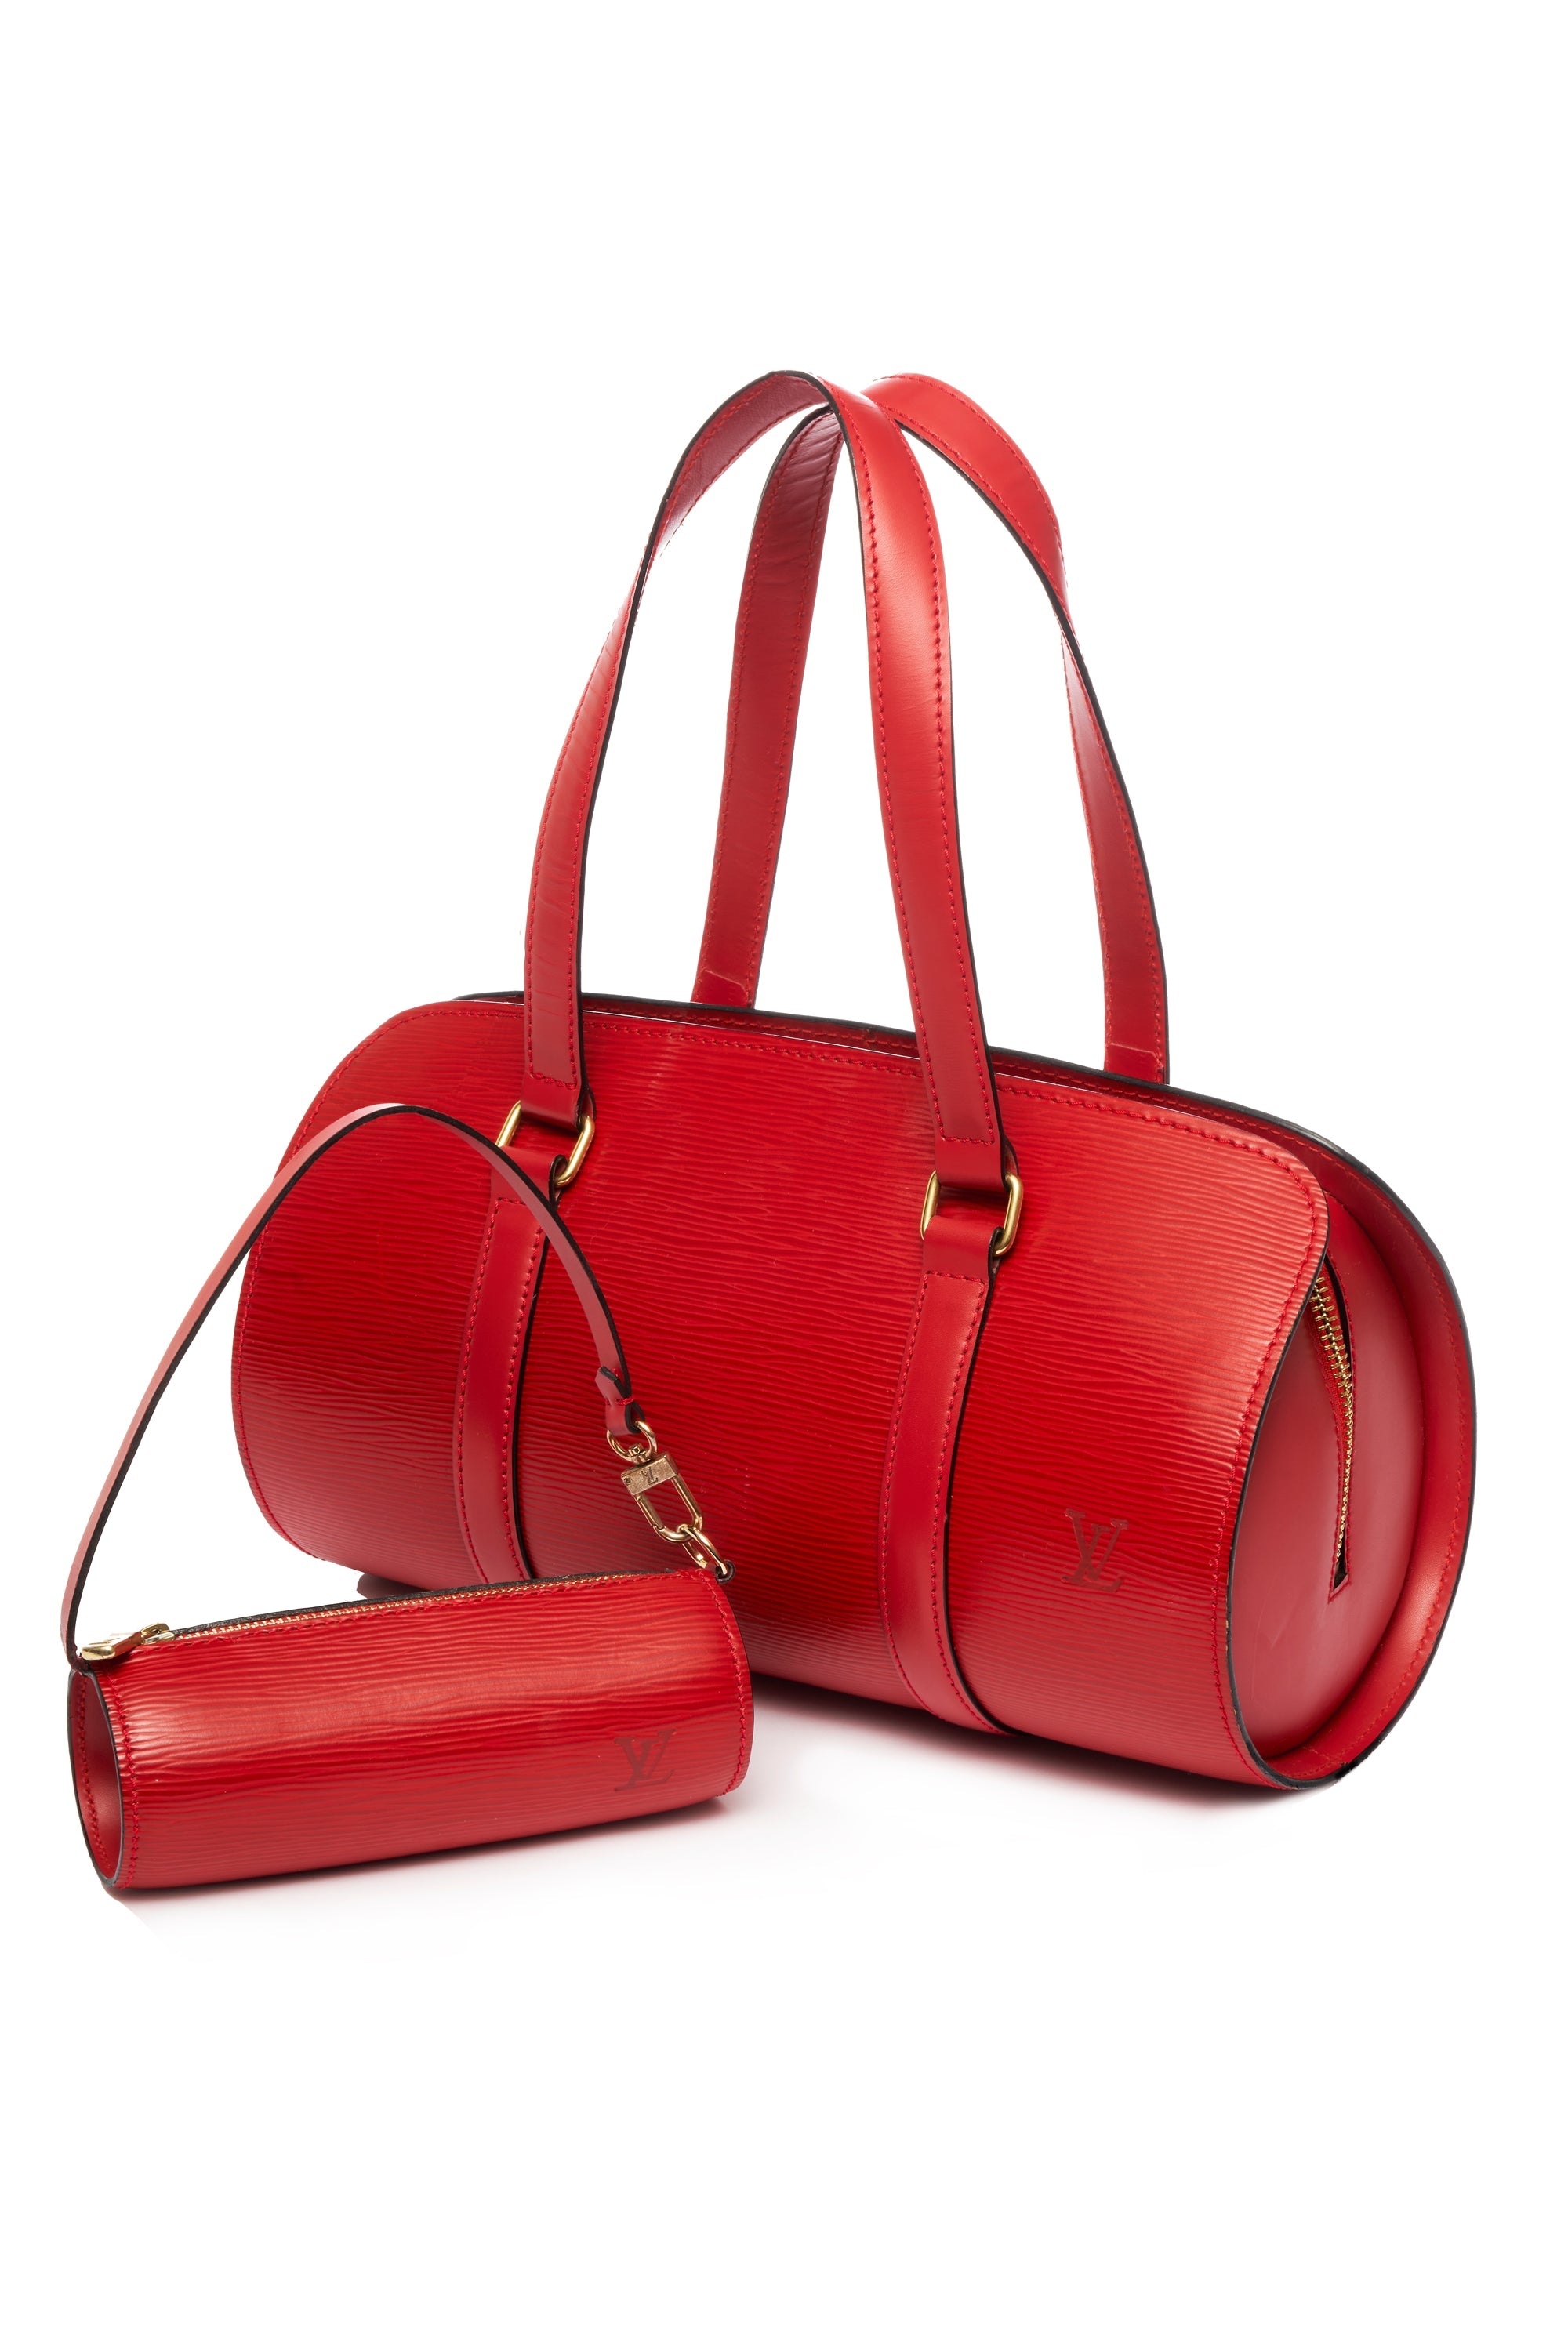 Louis Vuitton Red Epi Papillon Purse and Mini Set - Foxy Couture Carmel